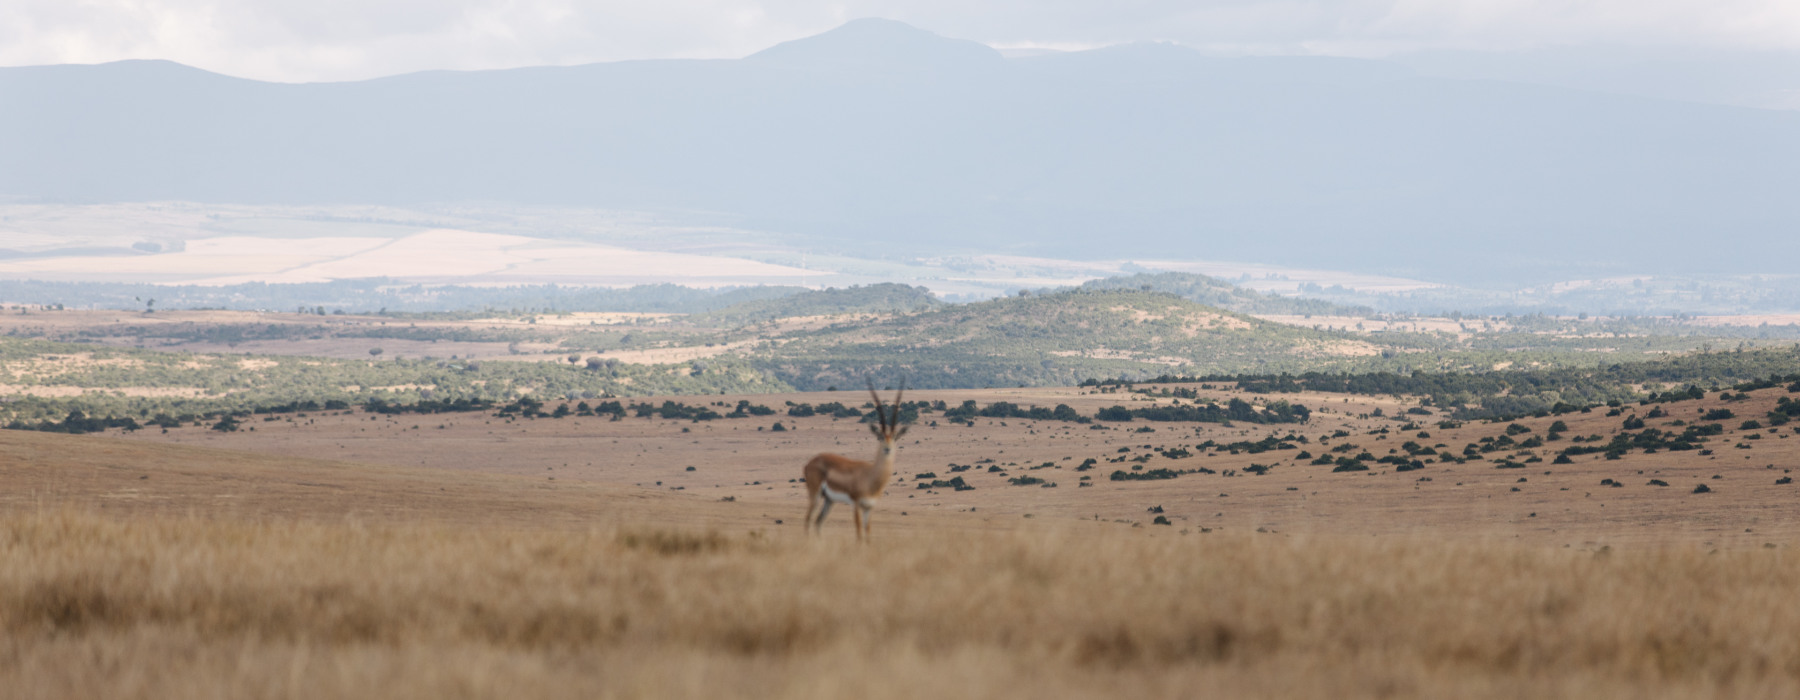 Kenya<br class="hidden-md hidden-lg" /> Wildlife Holidays